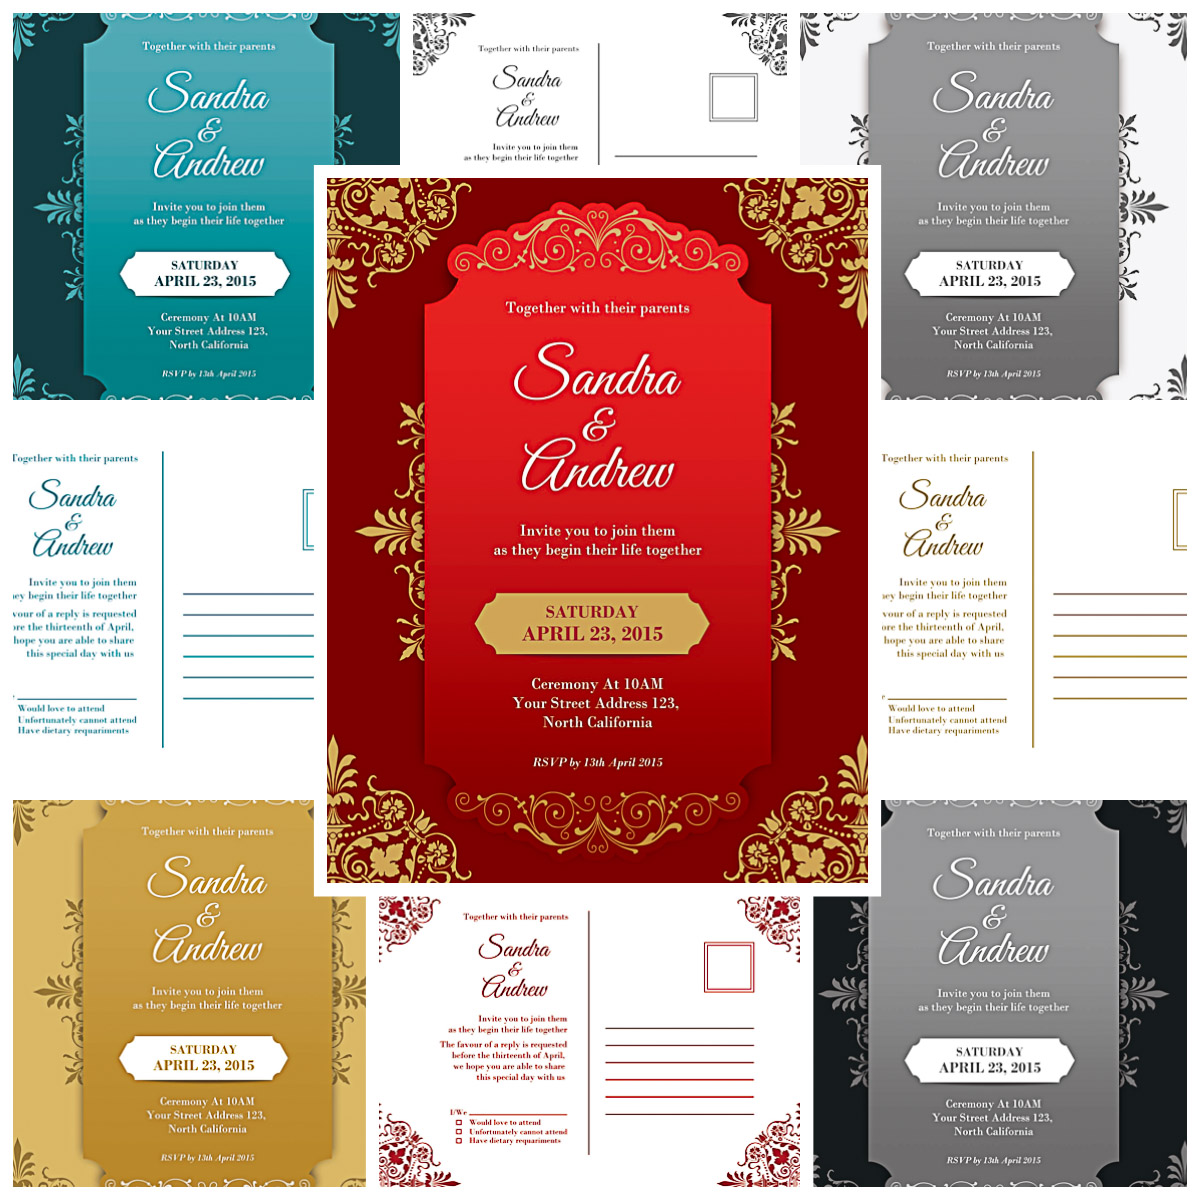 Ornate wedding invitations design vector